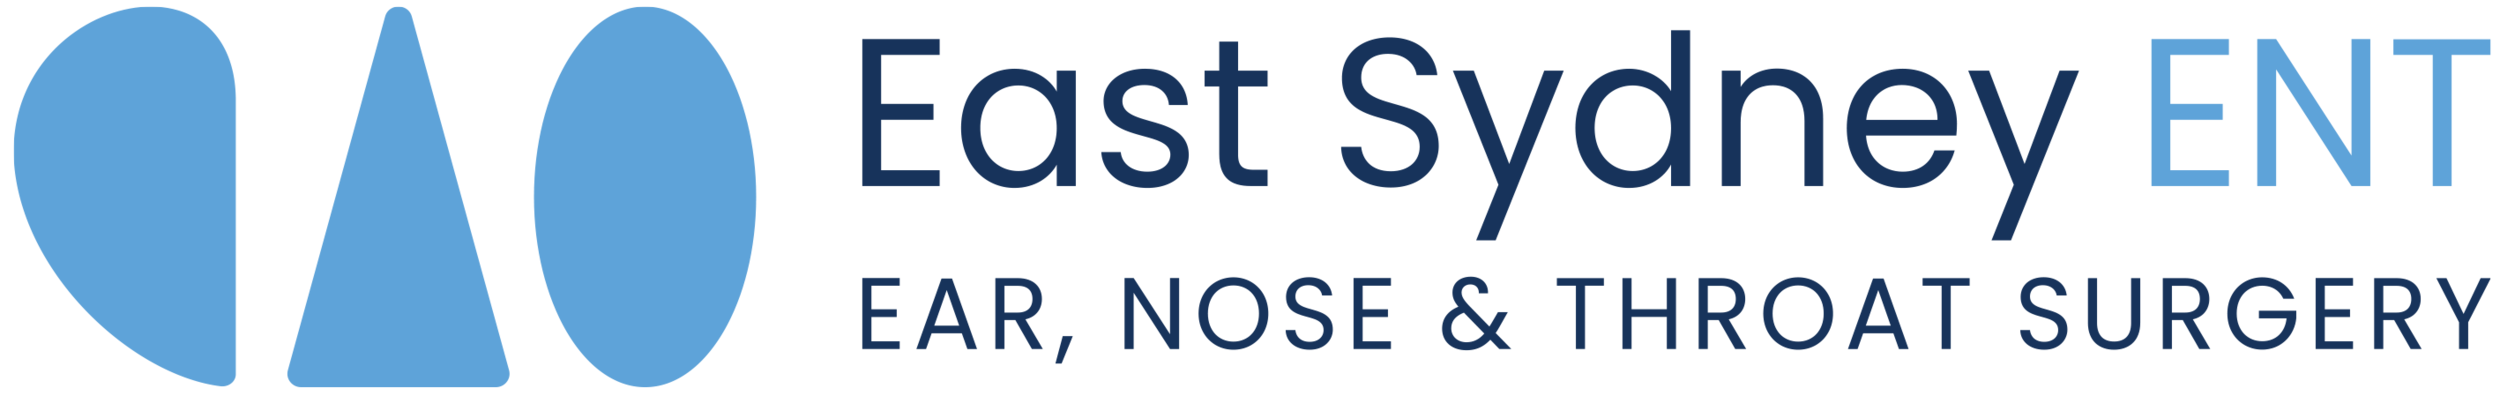 East Sydney ENT Surgery | Edgecliff East Sydney | Ear, Nose &amp; Throat Surgeons